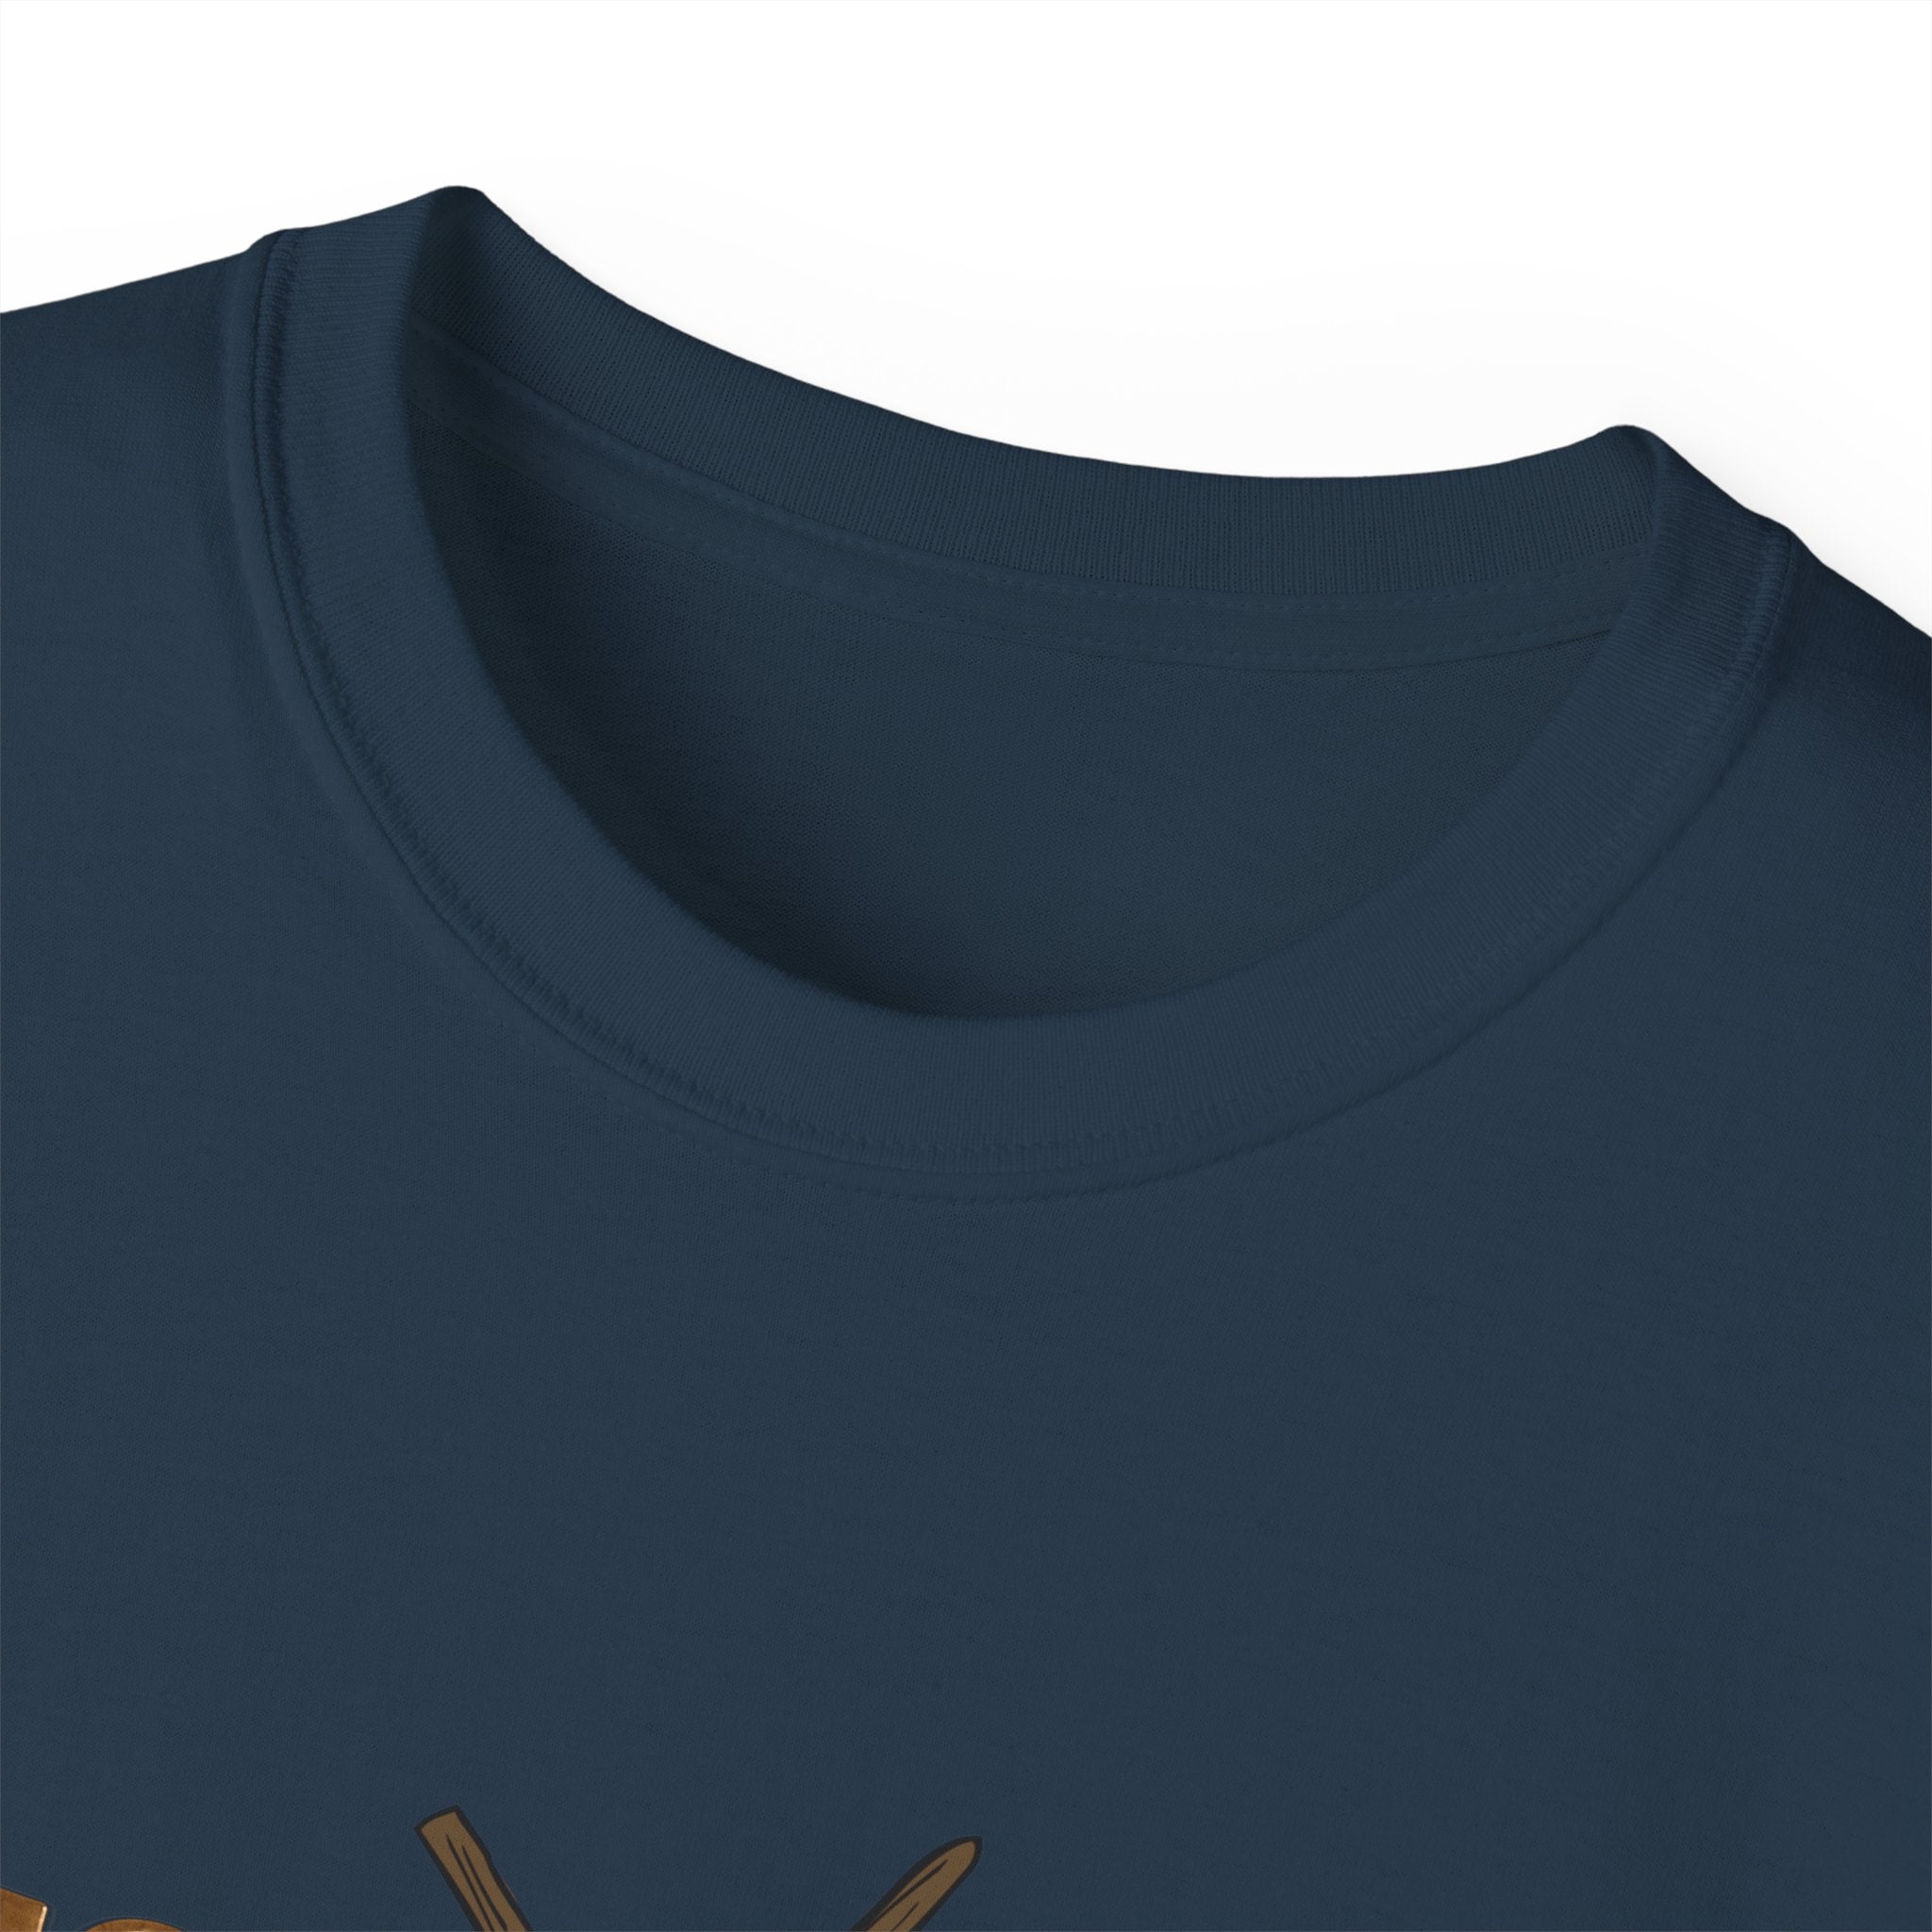 GPAA Logo T-Shirt - S - 5XL